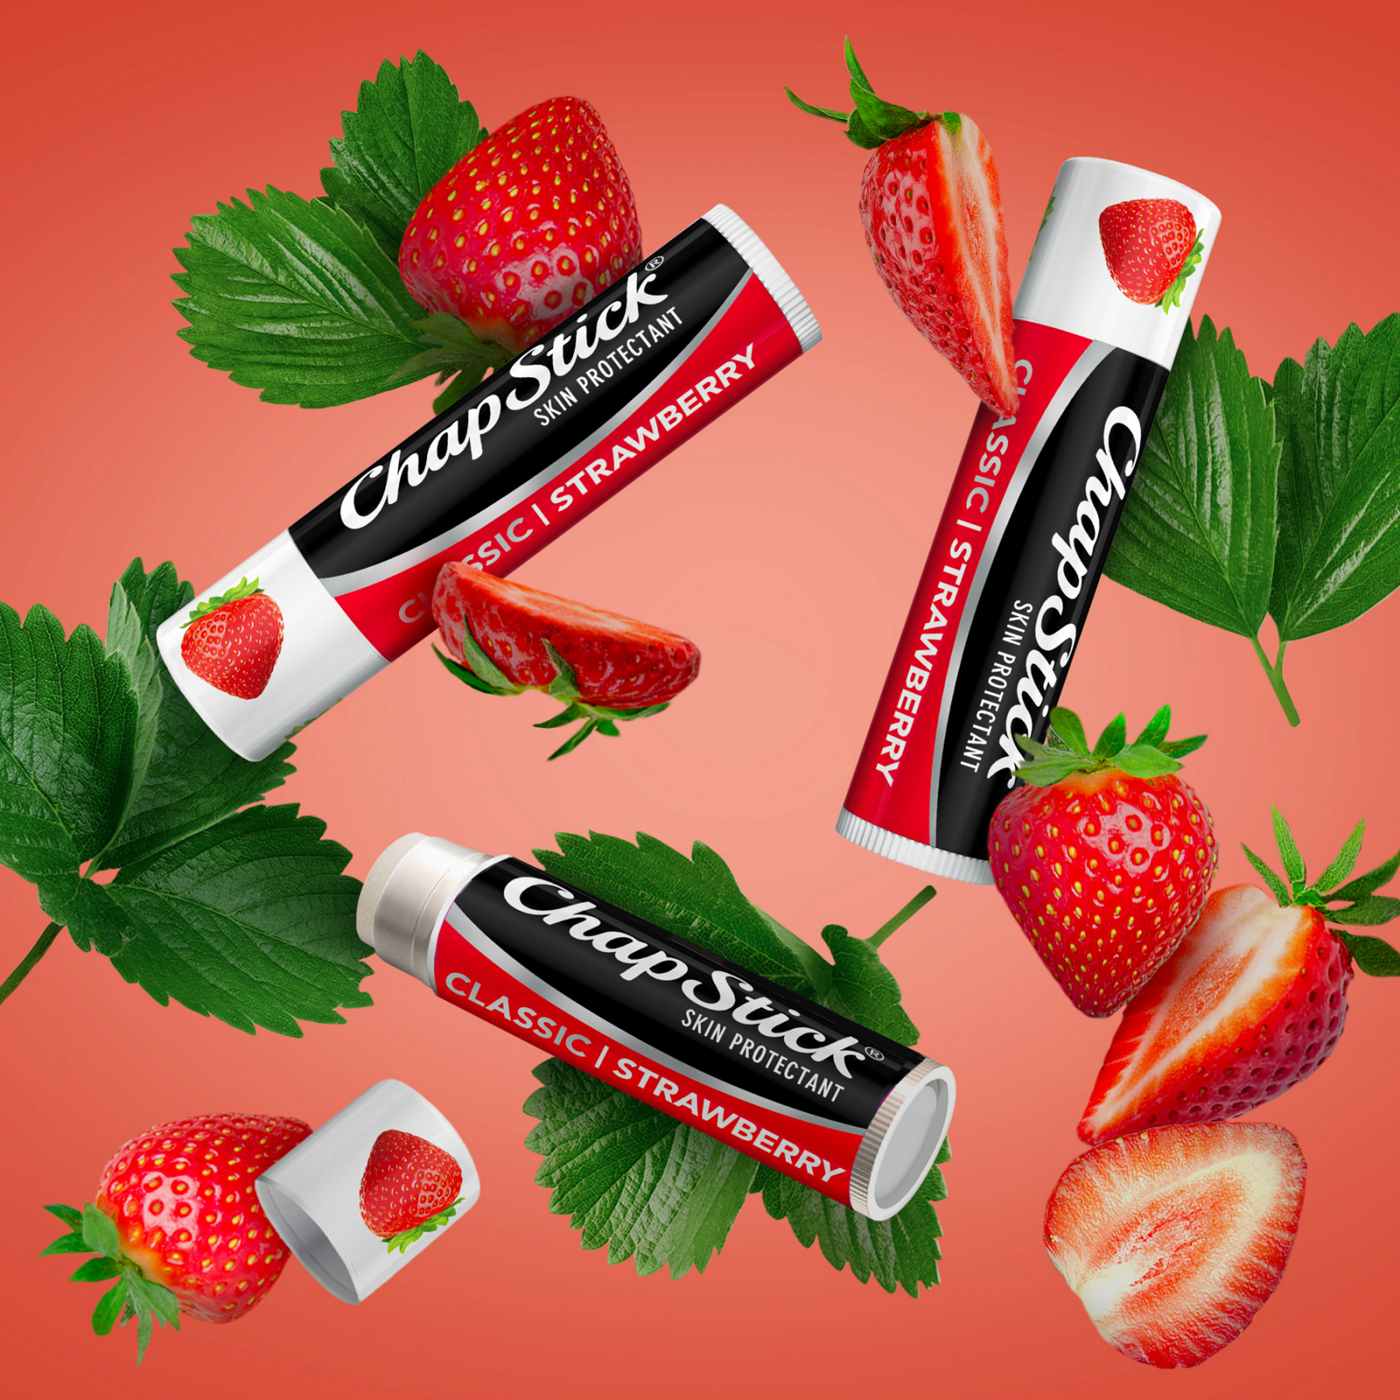 ChapStick Lip Balm Tube - Classic Strawberry; image 7 of 8